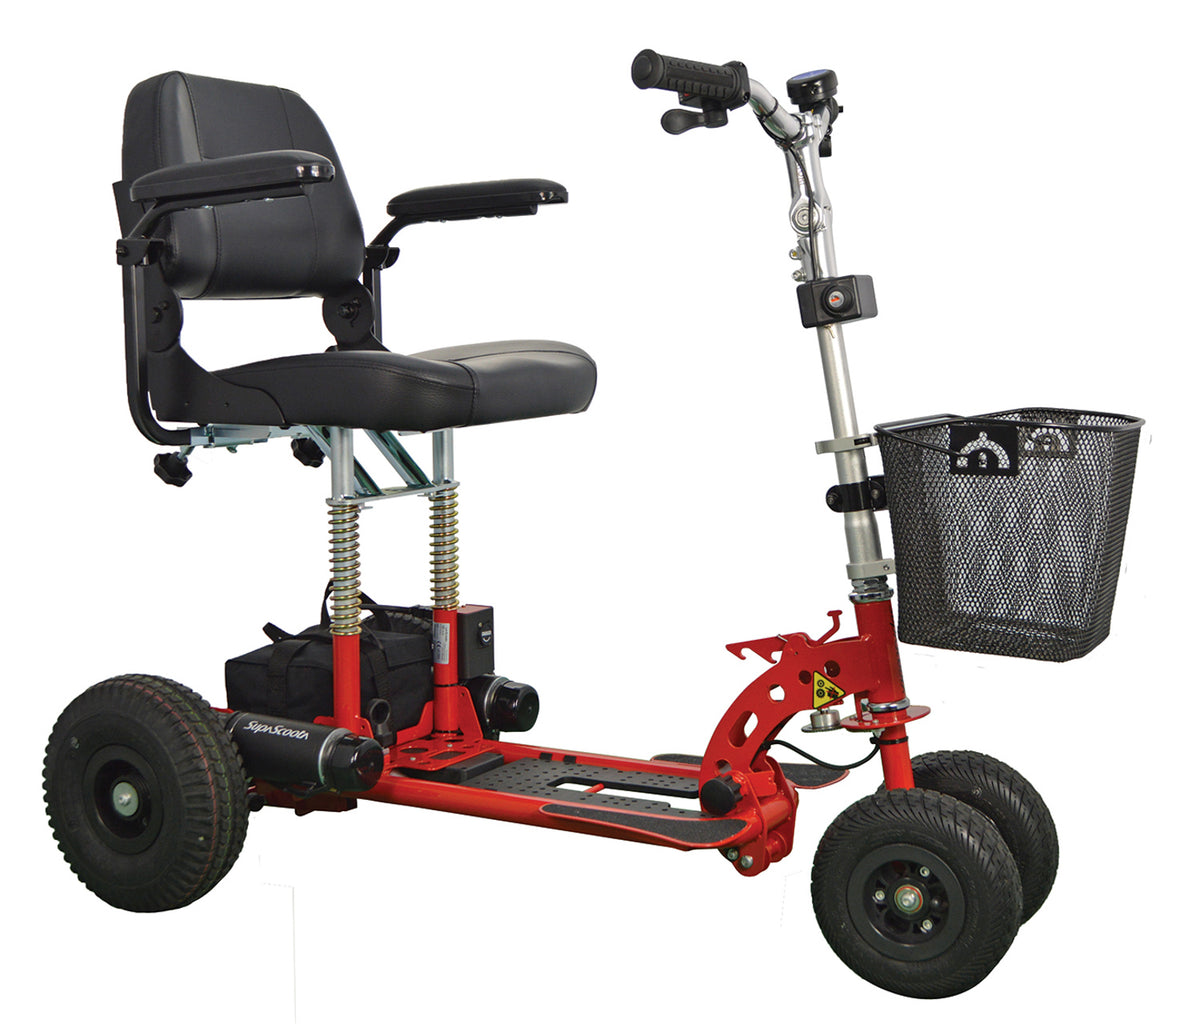 SupaScoota XL Sport Transportable Mobility Scooter Trike All-Terrain Folding